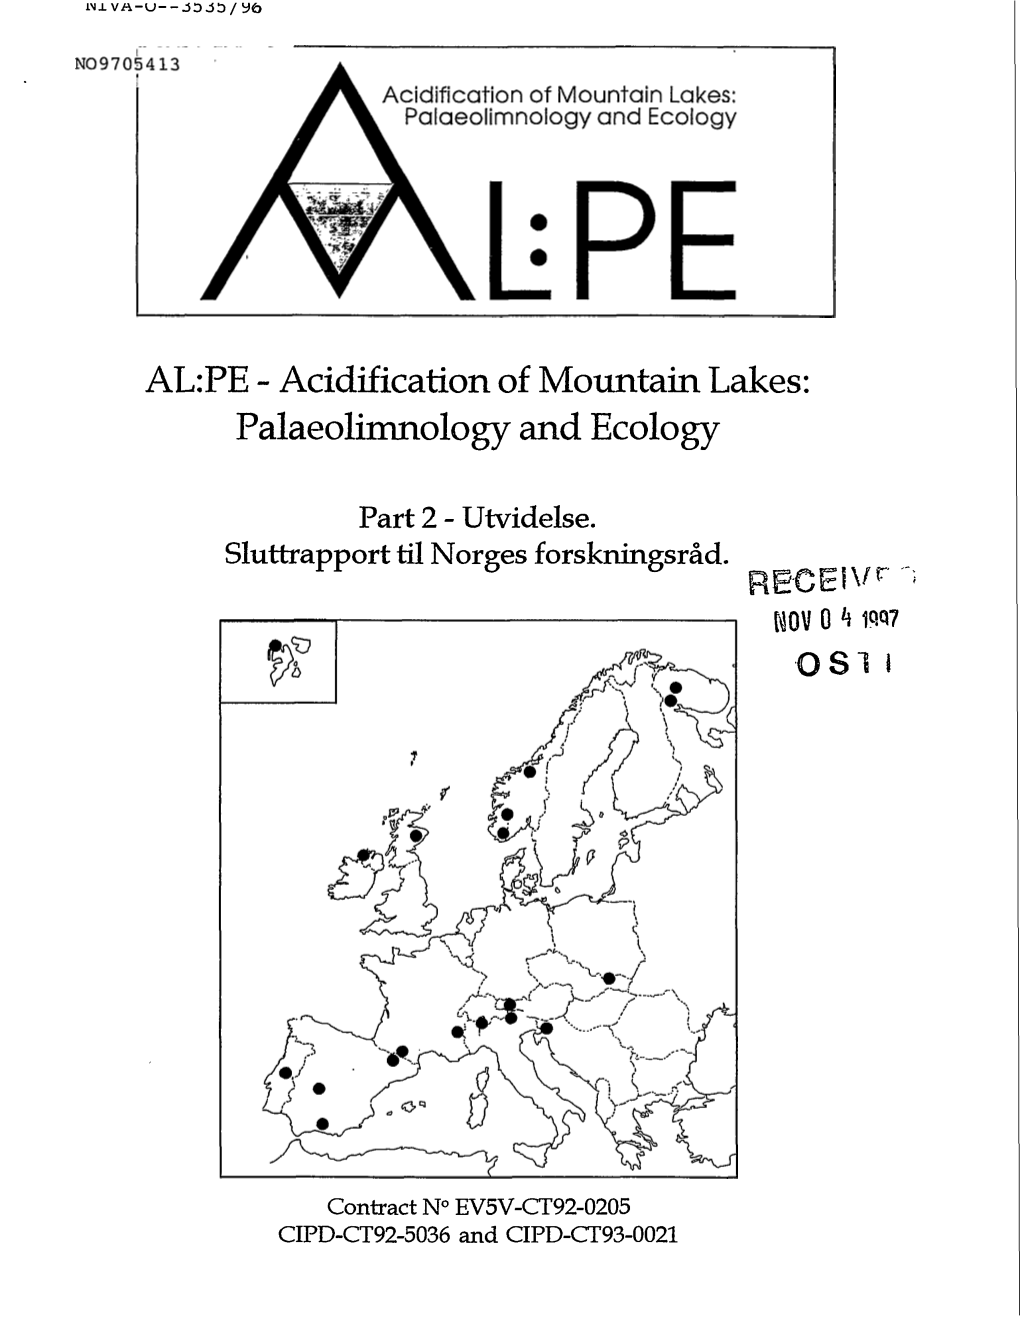 Acidification of Mountain Lakes: Palaeolimnology and Ecology